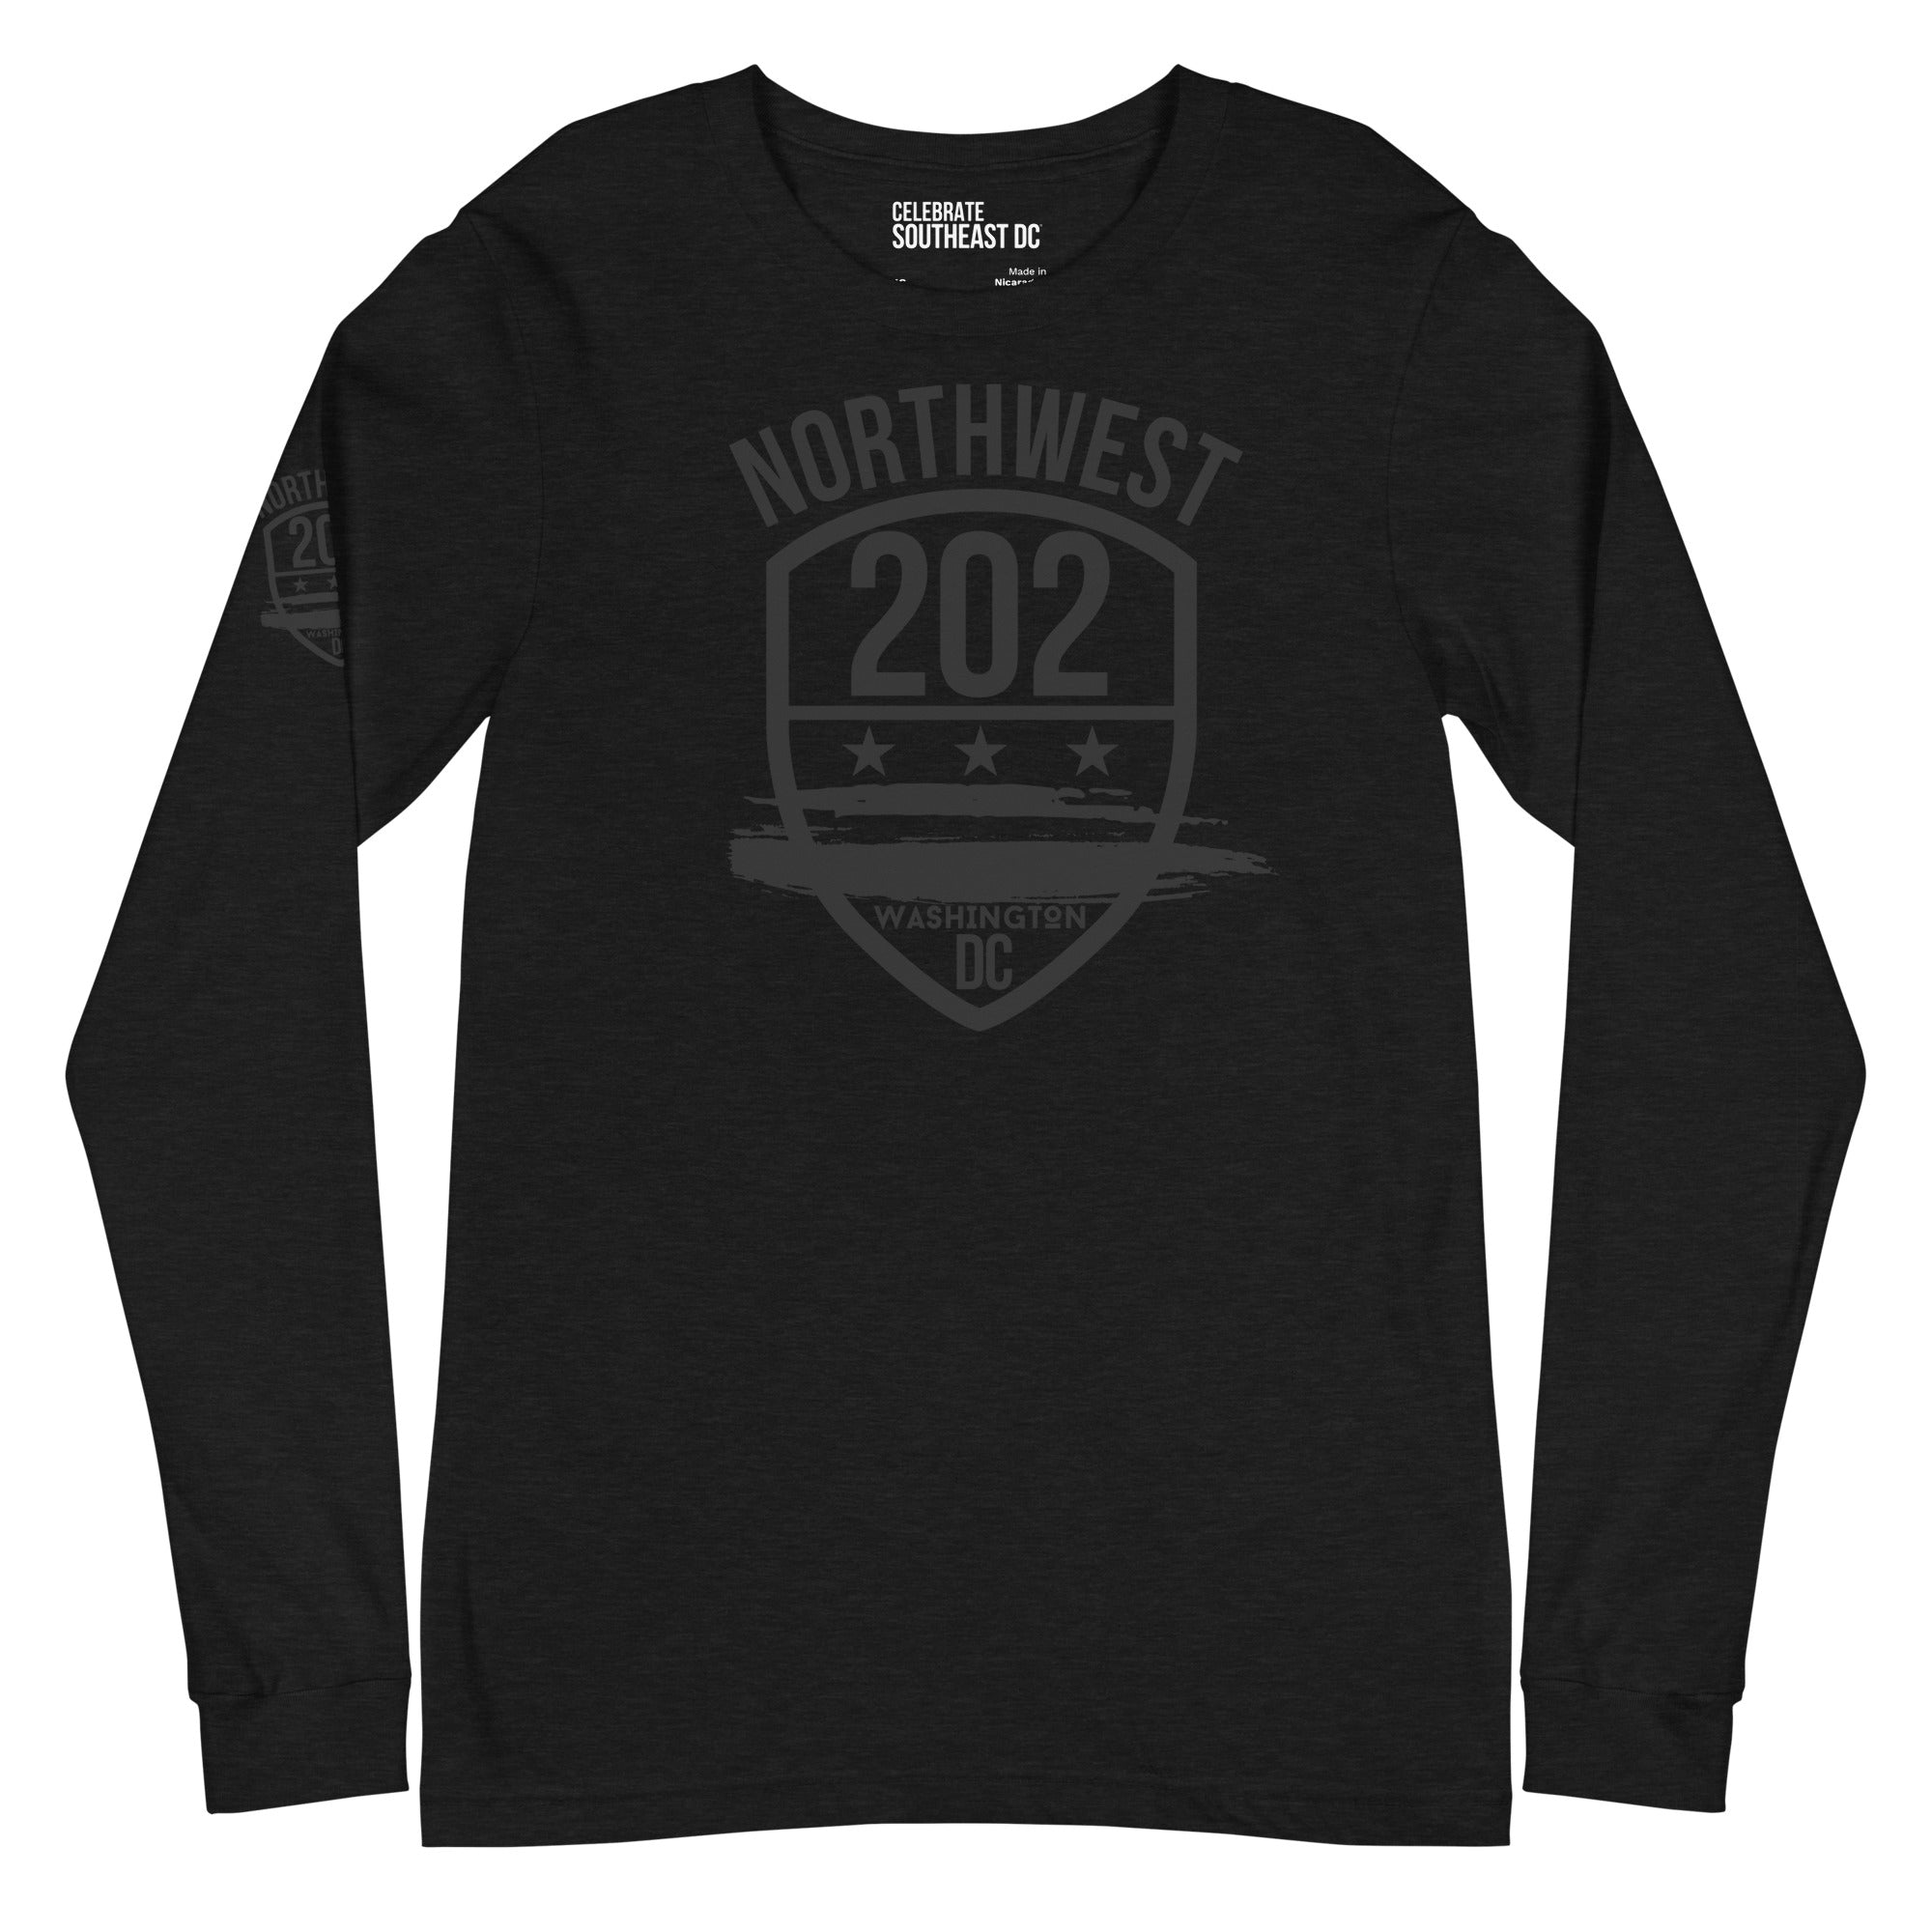 NORTHWEST/202 -Black Emblem on Black, Unisex Long Sleeve Tee